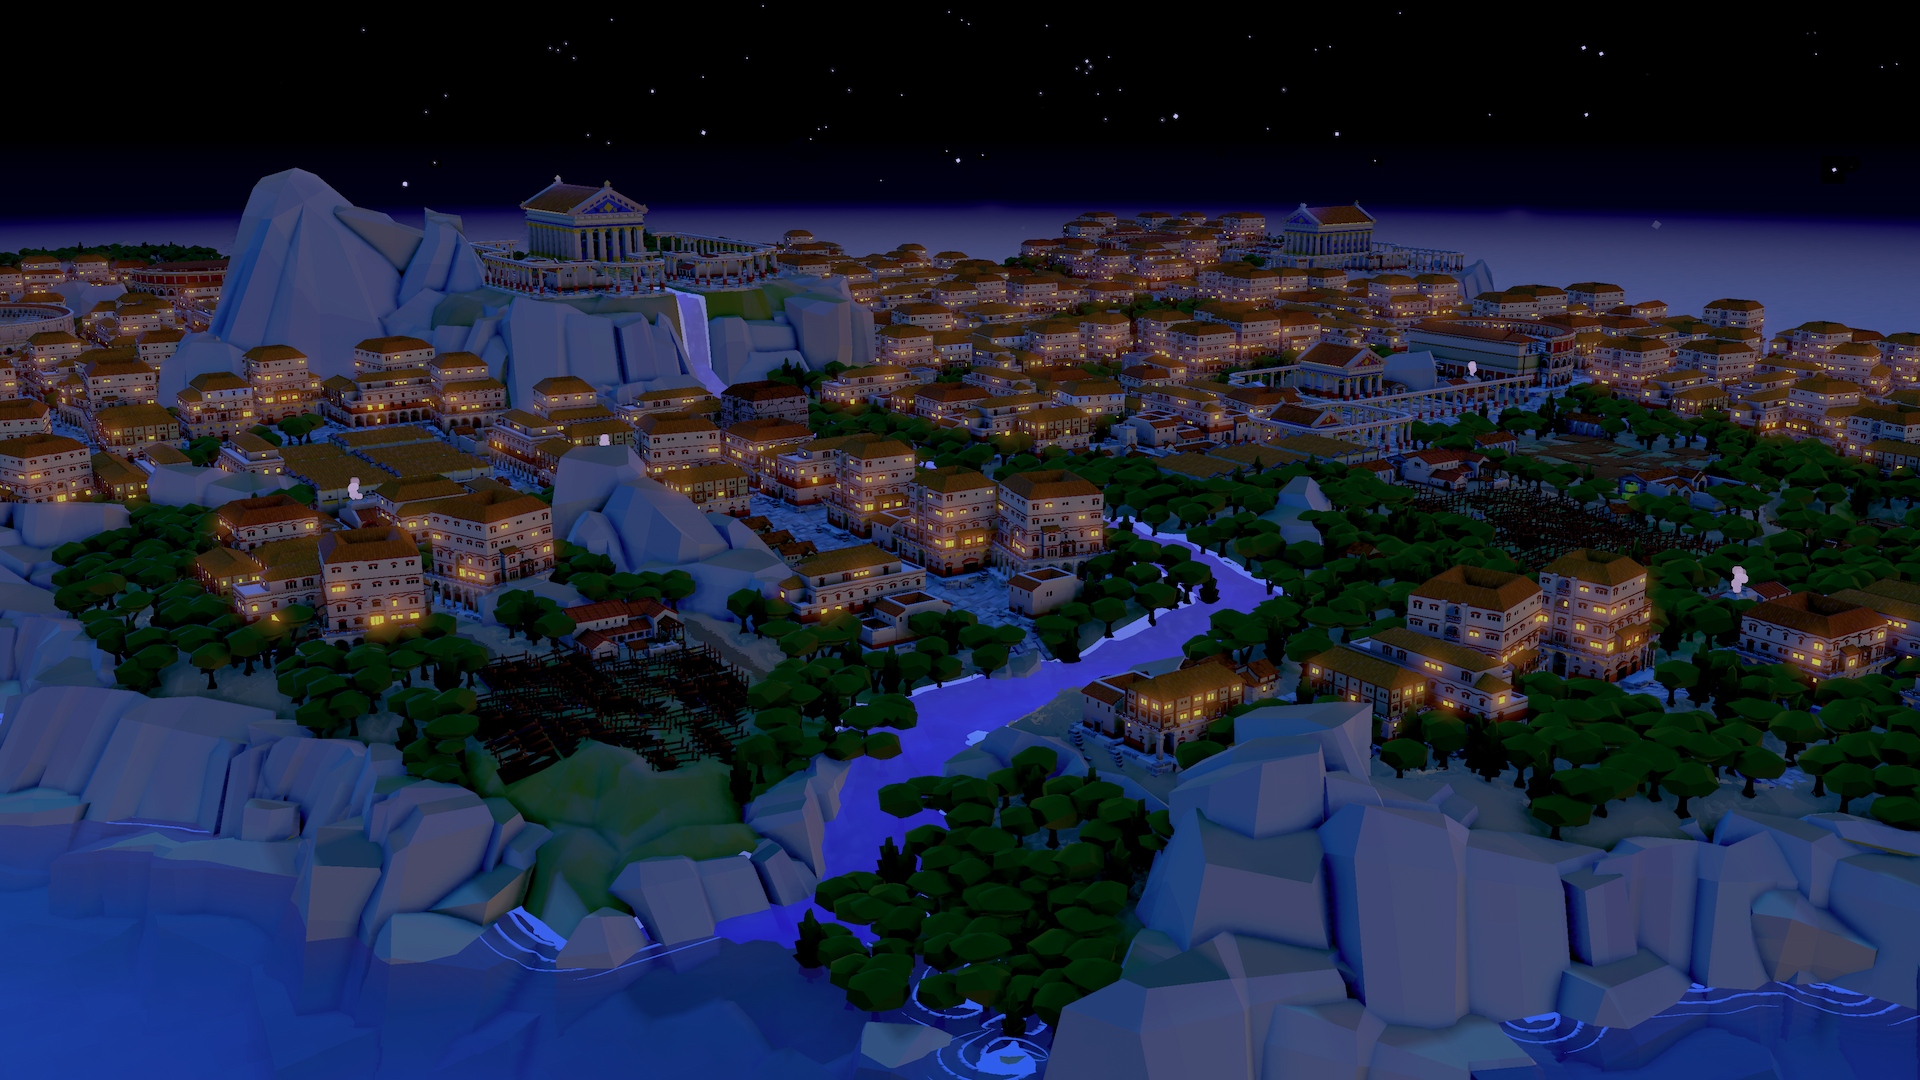 A night time cityscape image of the Roman Empire from Nova Roma